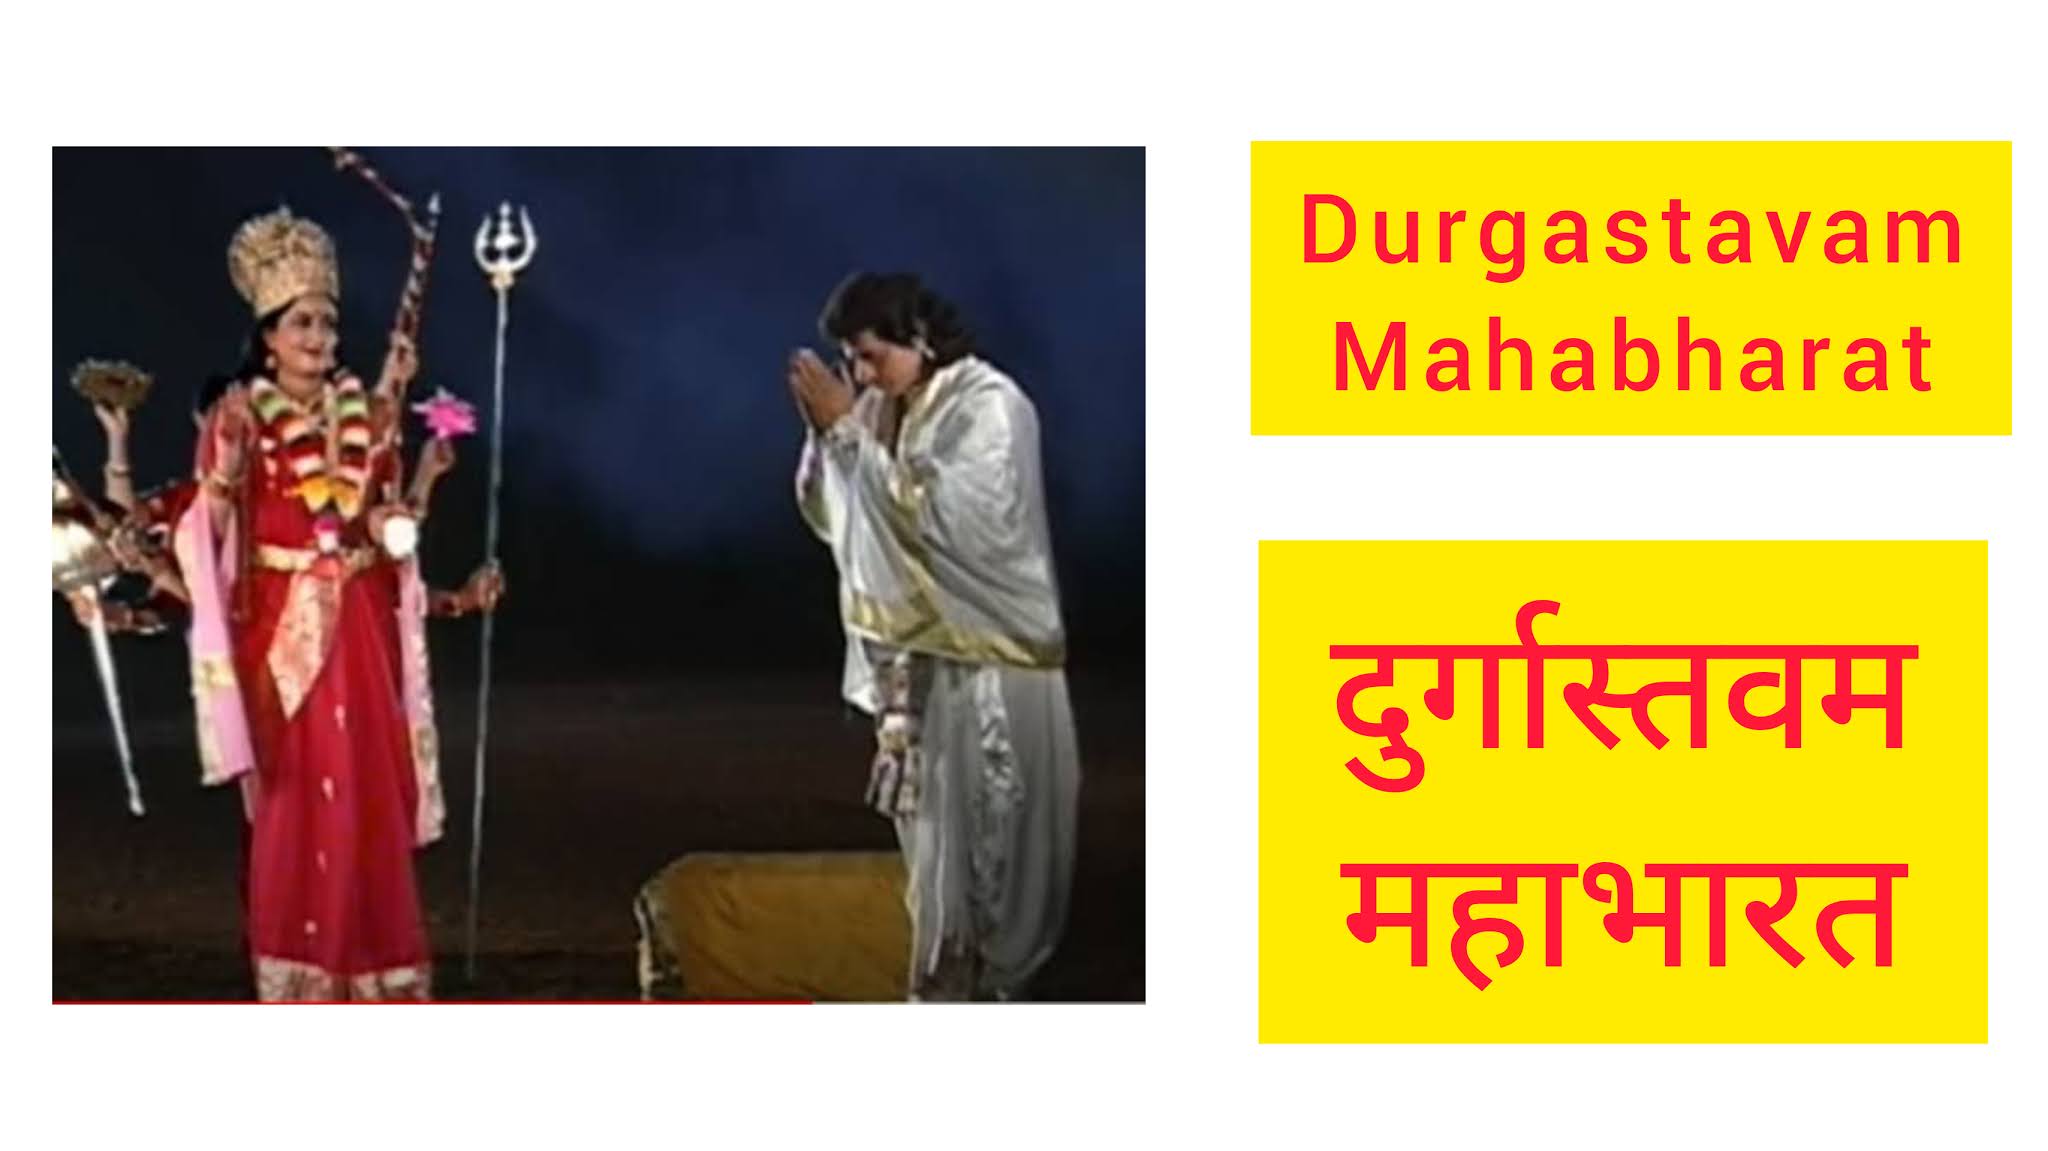 Durgastavam (Mahabharata) दुर्गास्तवम् महाभारतान्तर्गतम् in Sanskrit